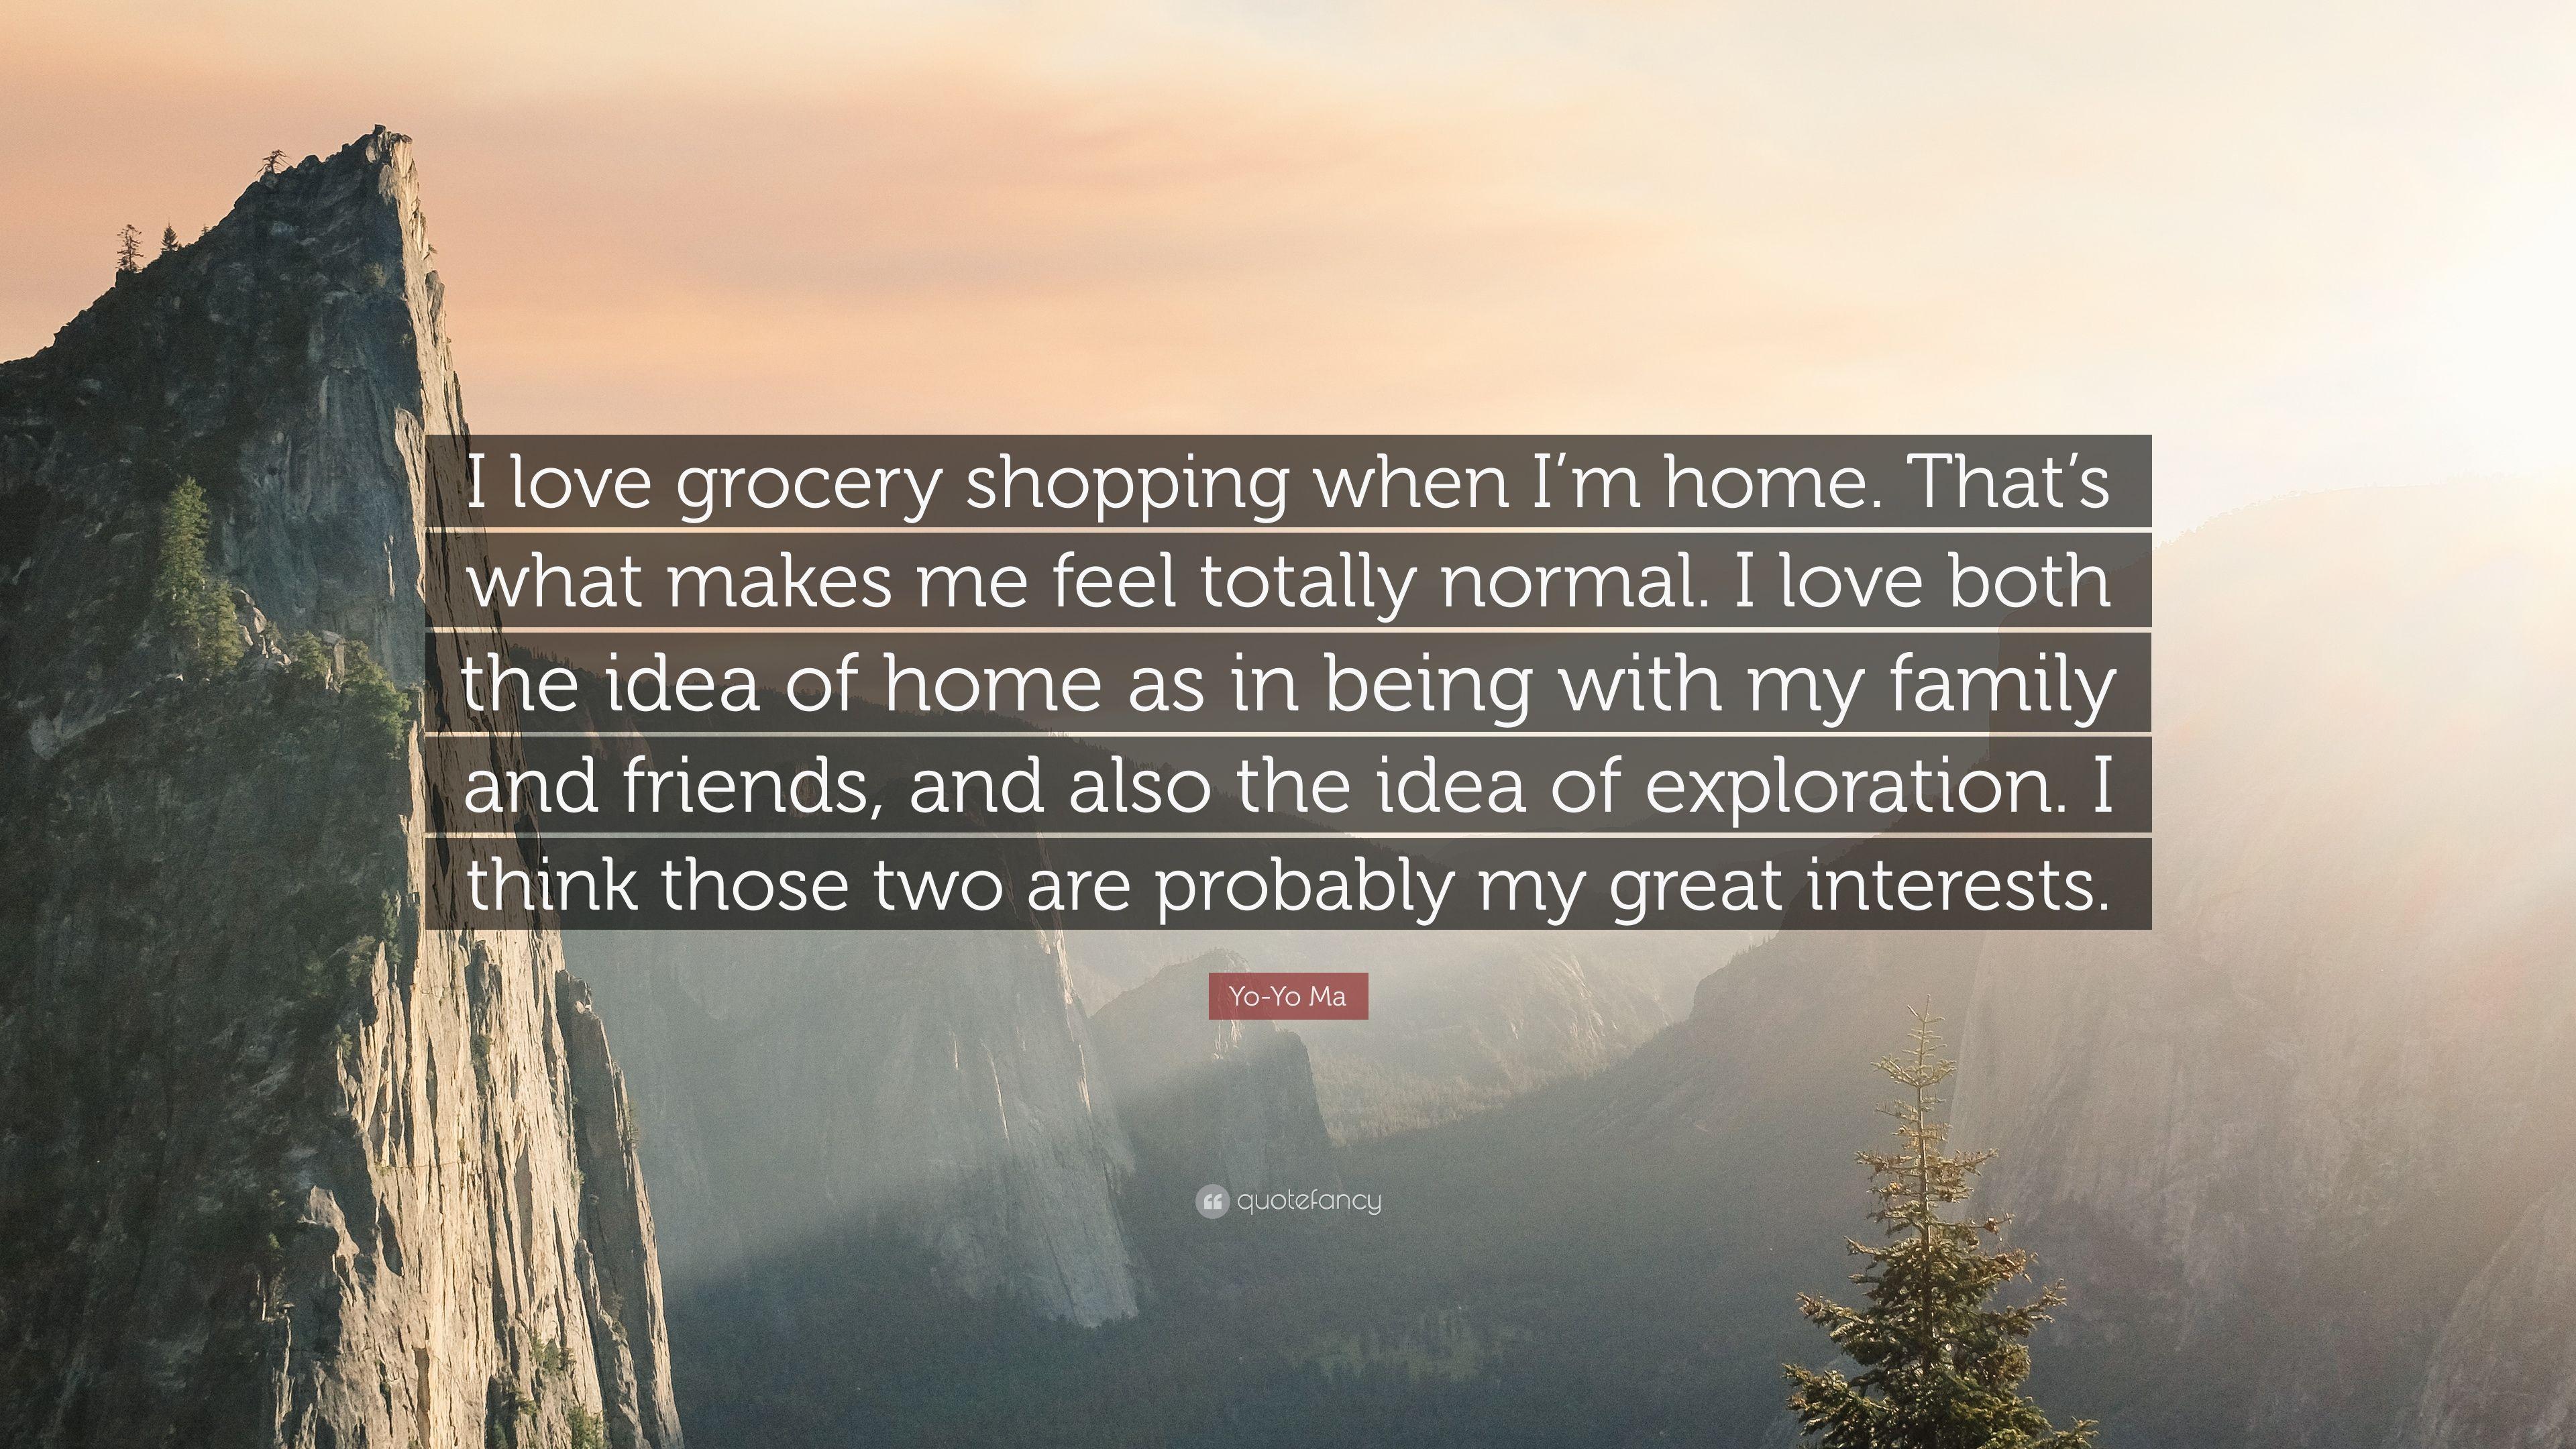 Yo Yo Ma Quote: “I Love Grocery Shopping When I'm Home. That's